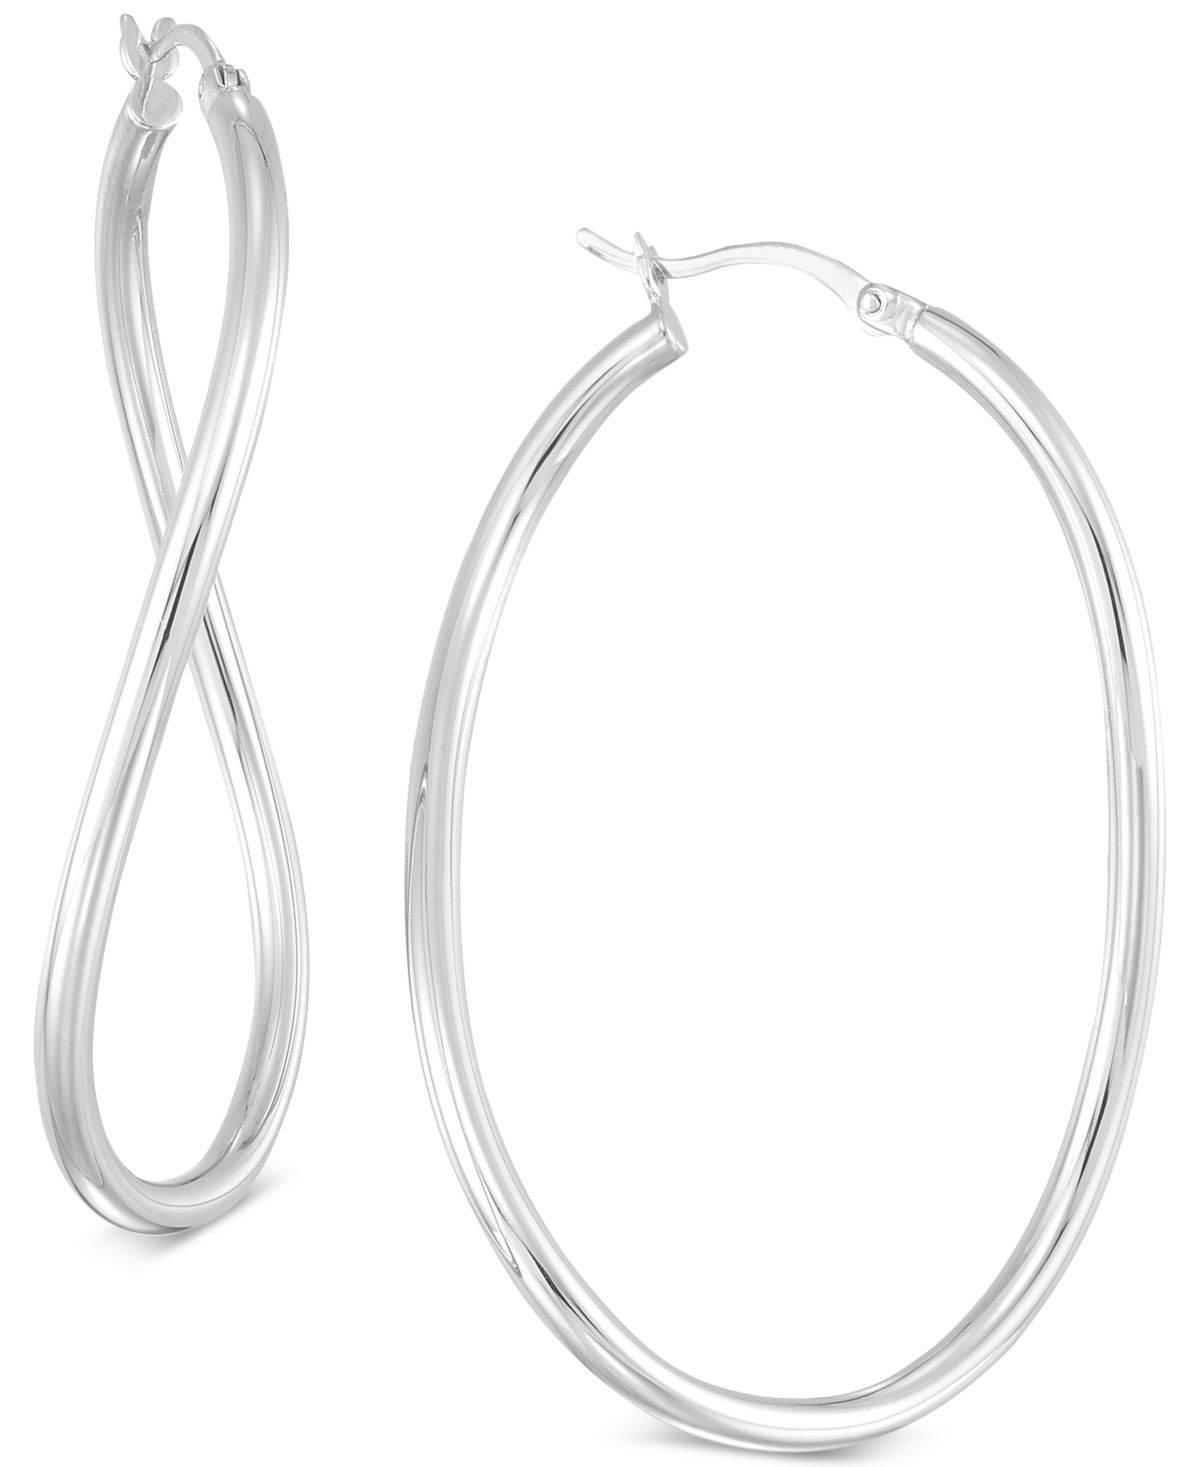 Wavy Hoop Earrings in 18k Gold over Sterling Silver or Sterling Silver - Silver